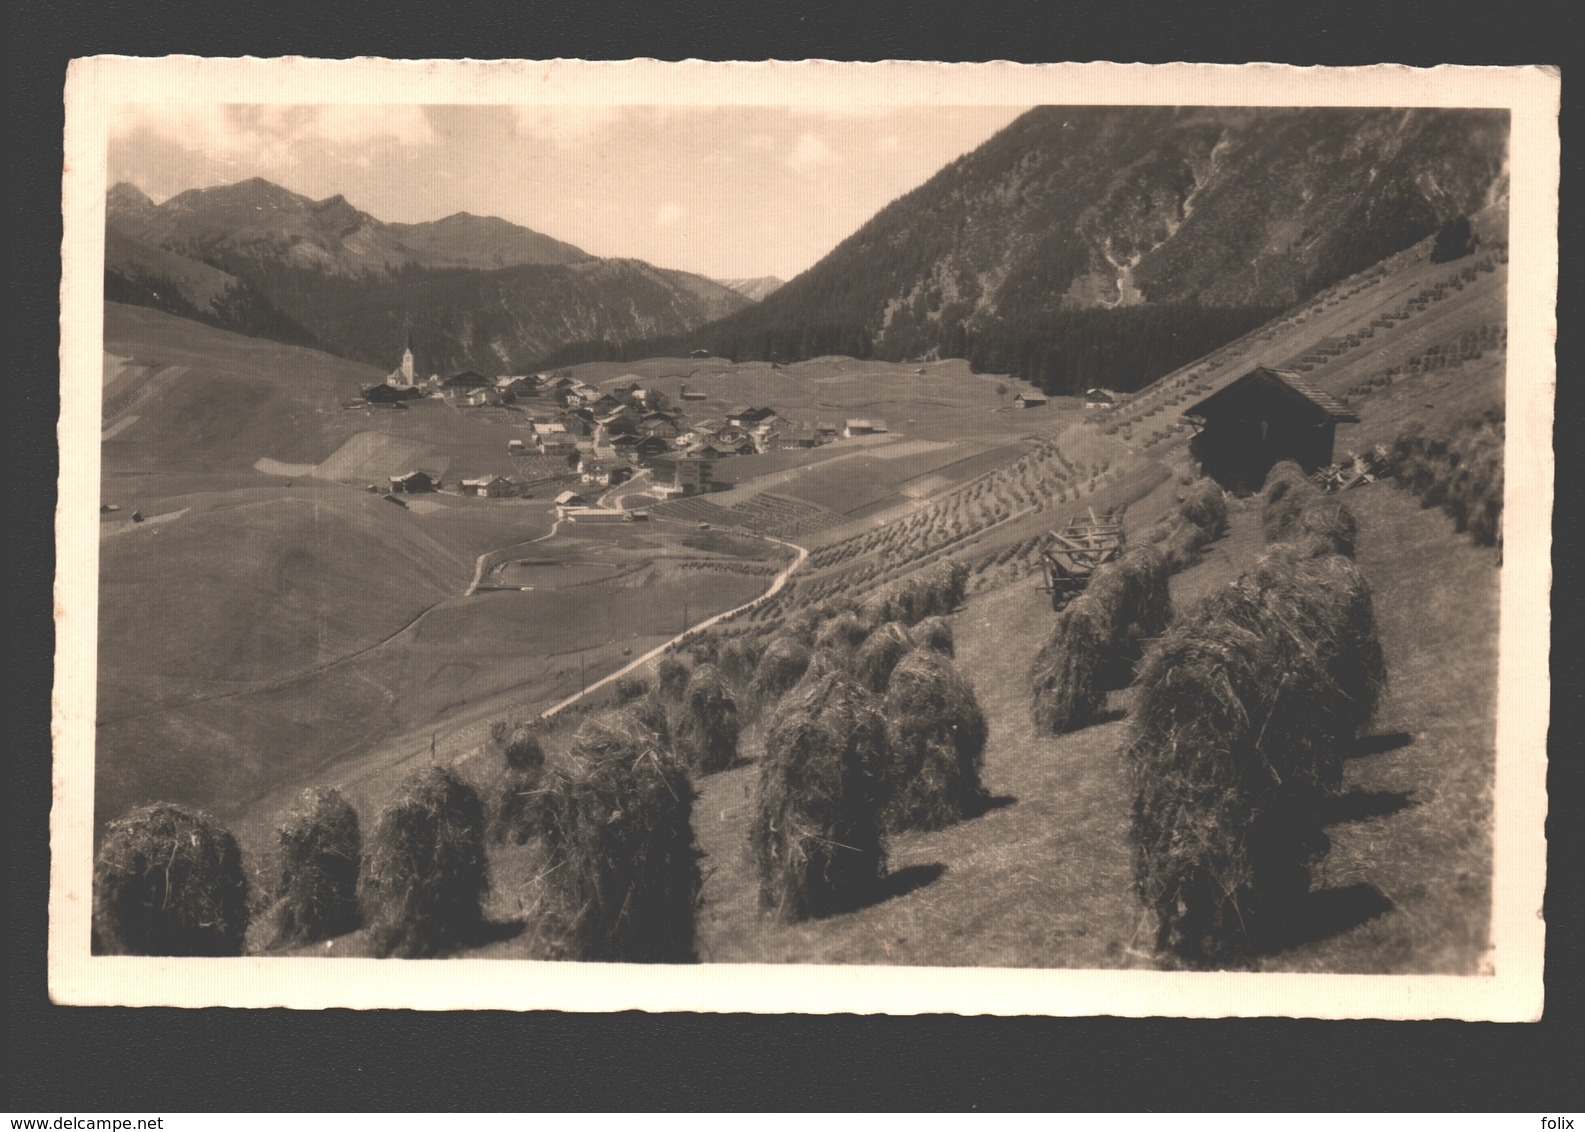 Berwang - Berwang In Tirol Mit Lechtaler Alpen - 1955 - Fotokarte - Verlag Fredy, Berwang - Haystack / Heuhaufen / Foin - Berwang